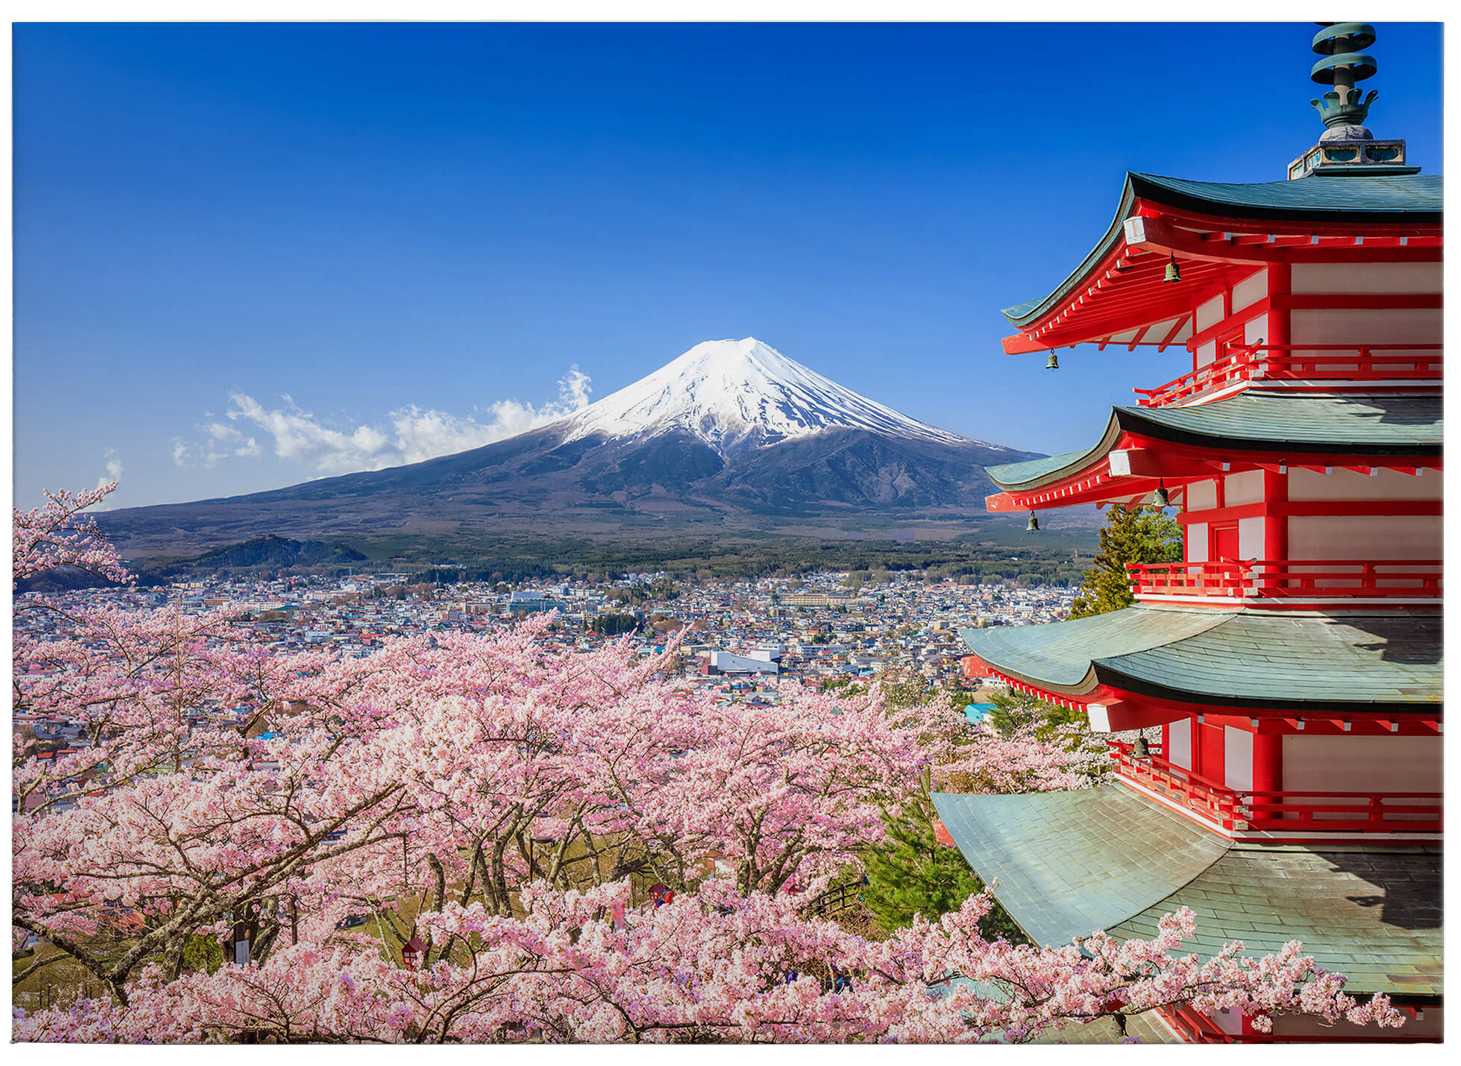             Fujiyama canvas print with cherry blossoms and pagoda
        